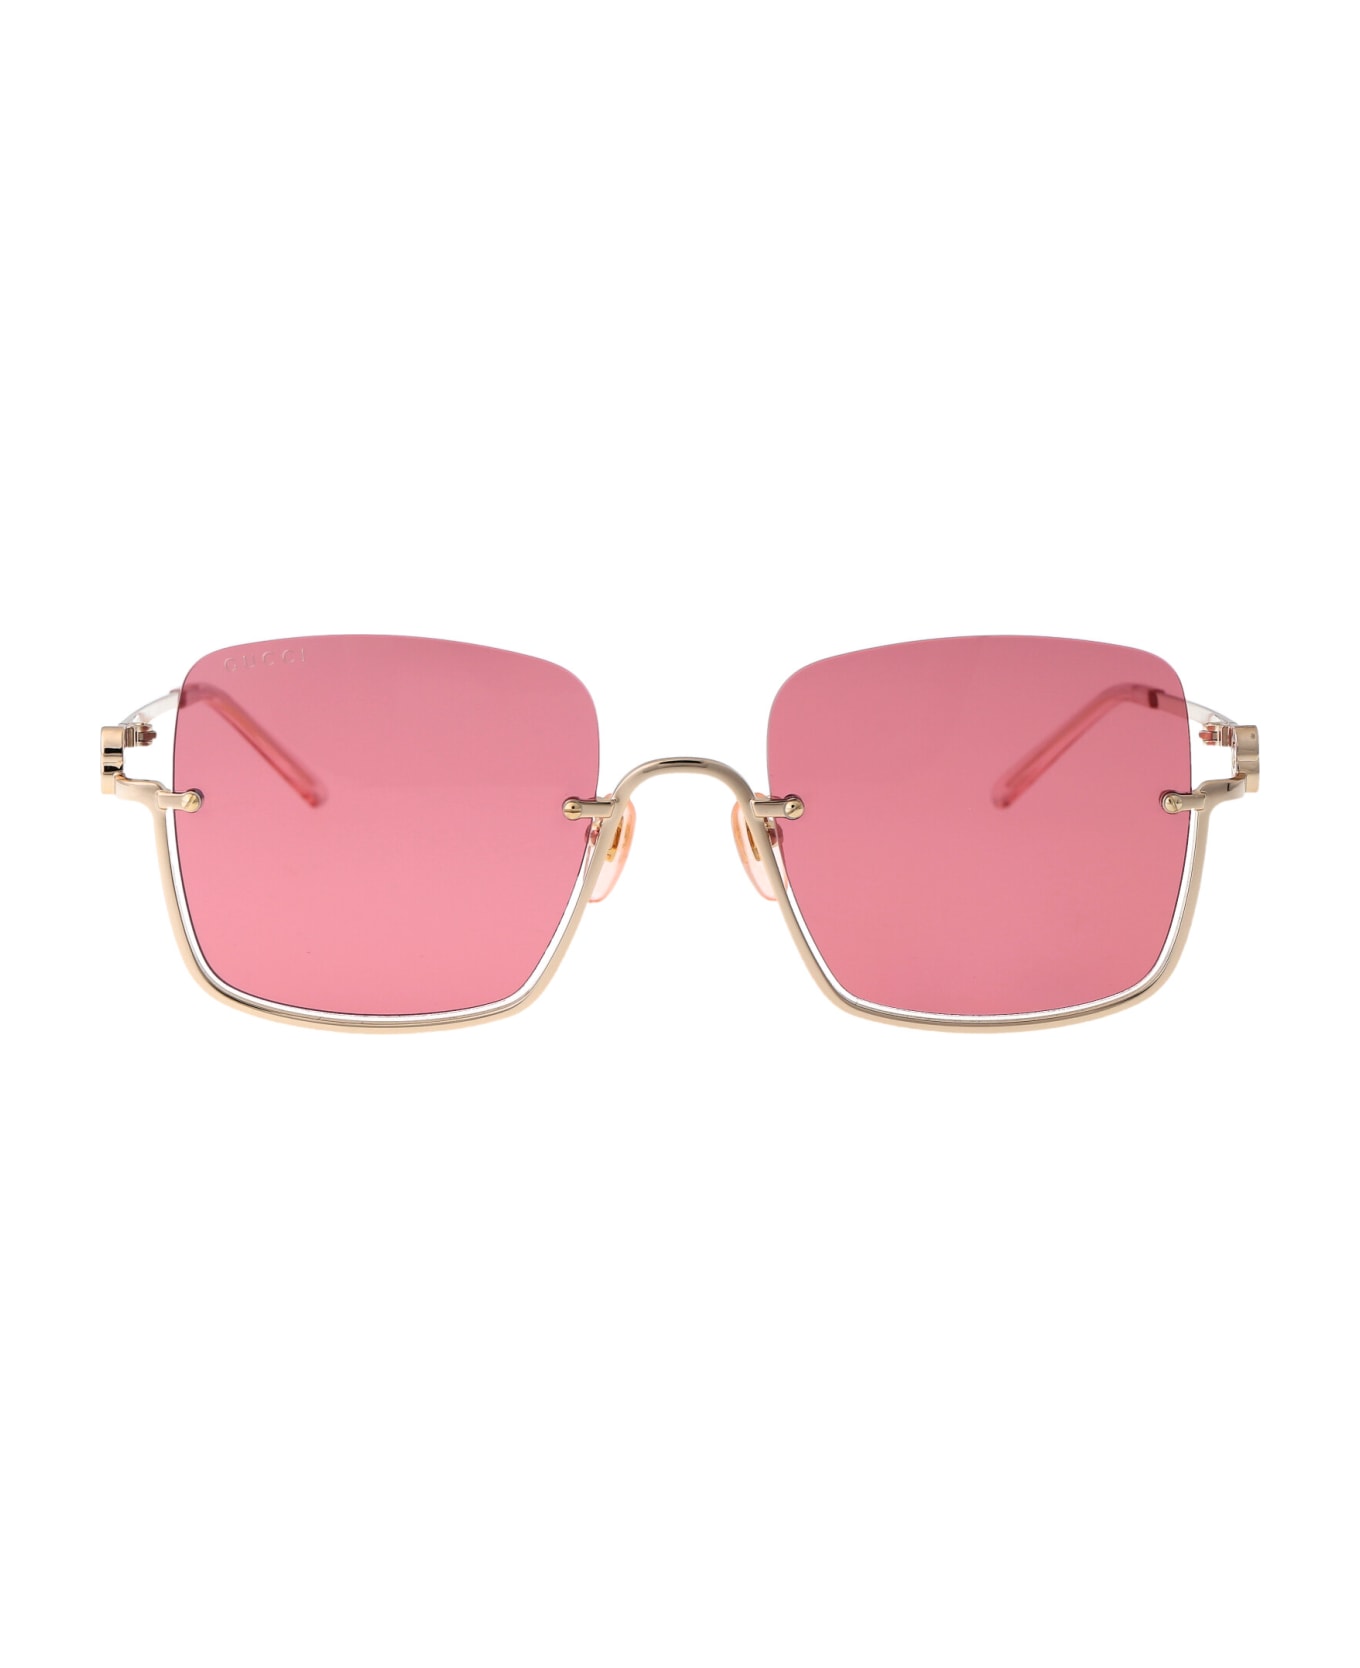 Gucci Eyewear Gg1279s Sunglasses - 003 GOLD GOLD RED サングラス